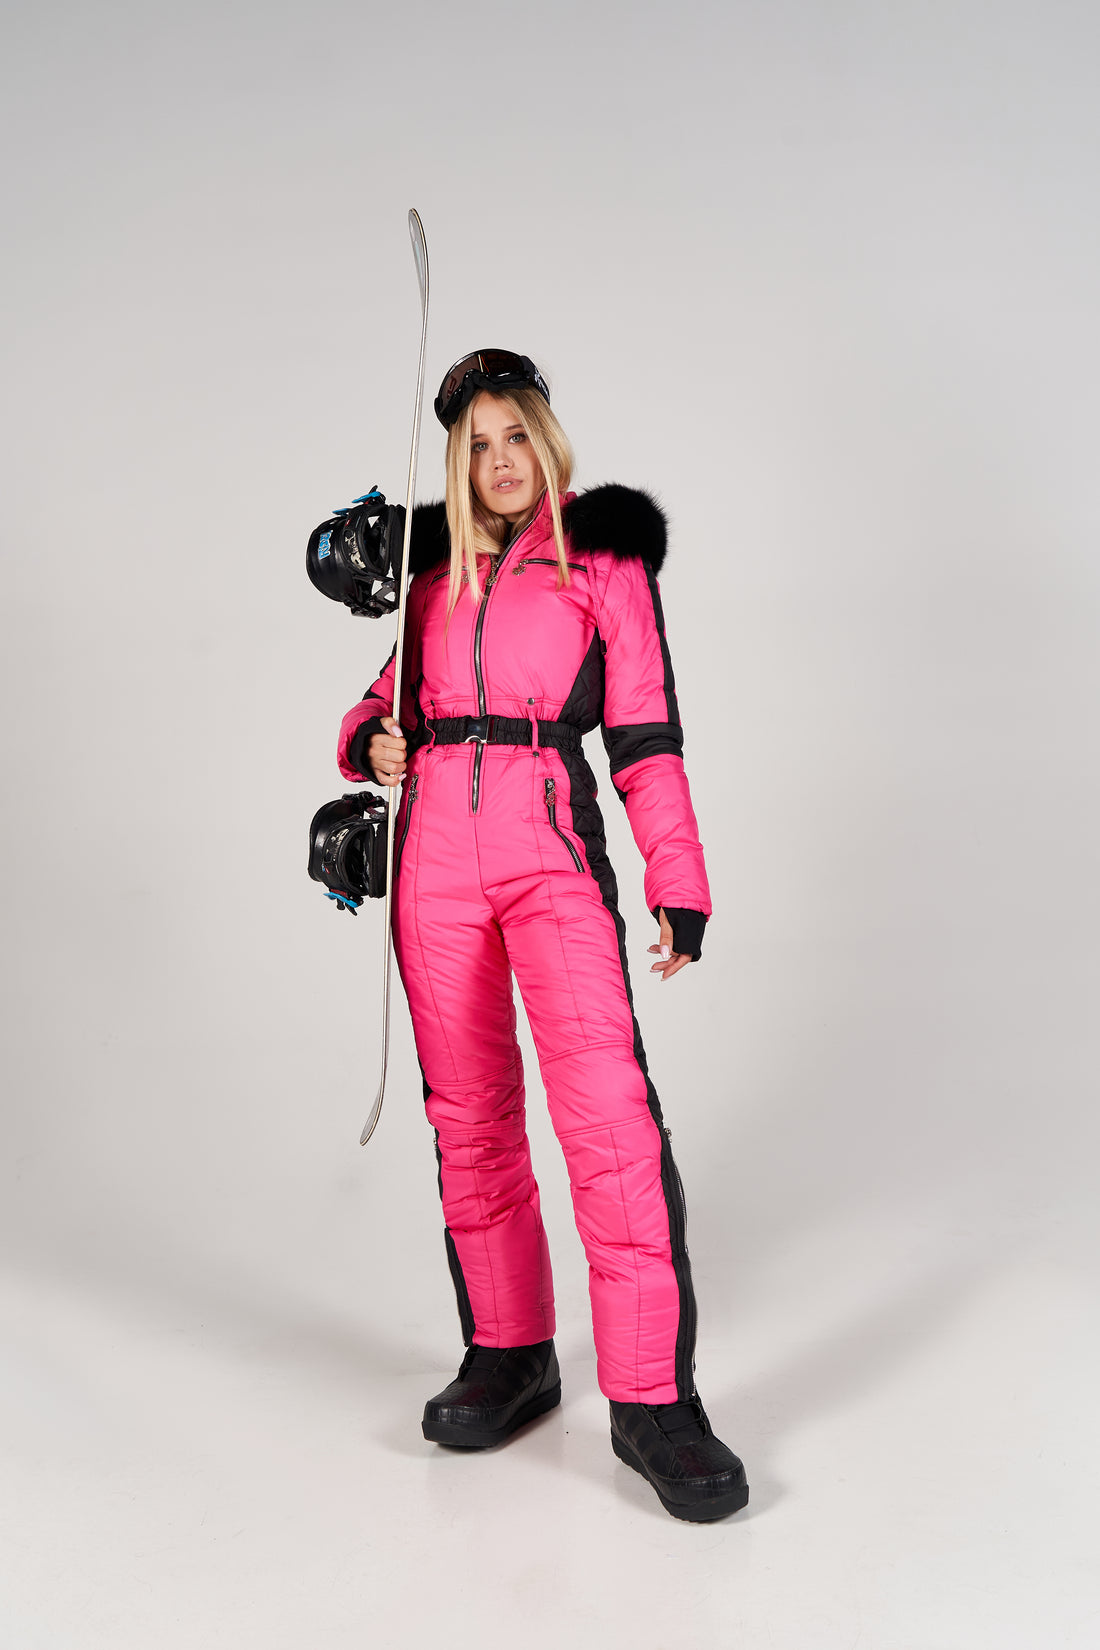 Hot pink ski jumpsuit DENALI - PINK-BLACK stripes snowsuit